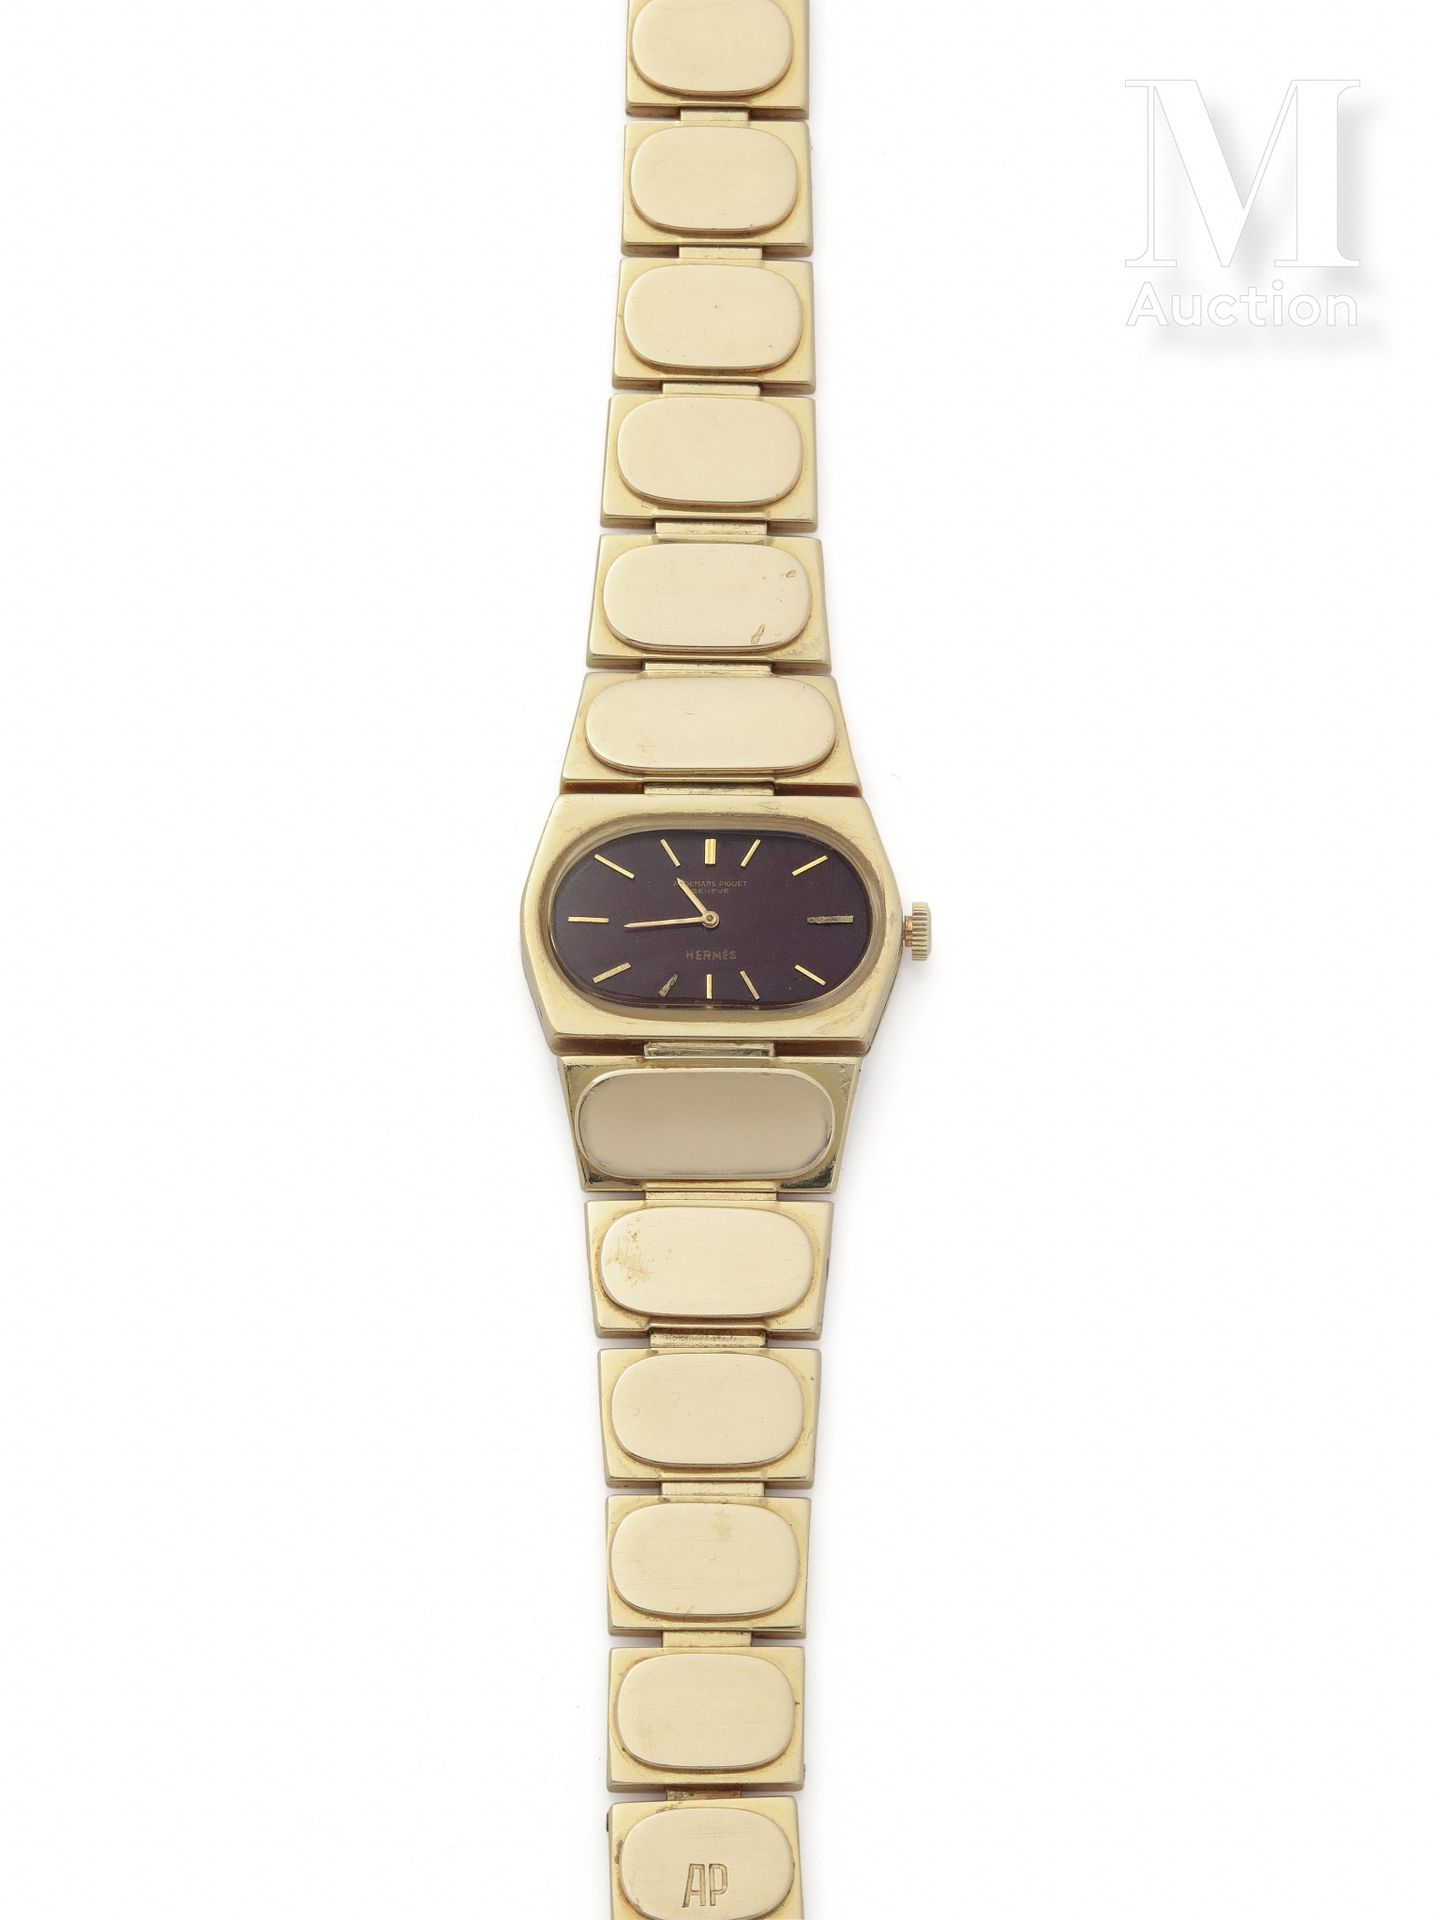 Audemars Piguet pour HERMES Woman's watch 

Circa 1970

Ref.8534

18-carat gold &hellip;